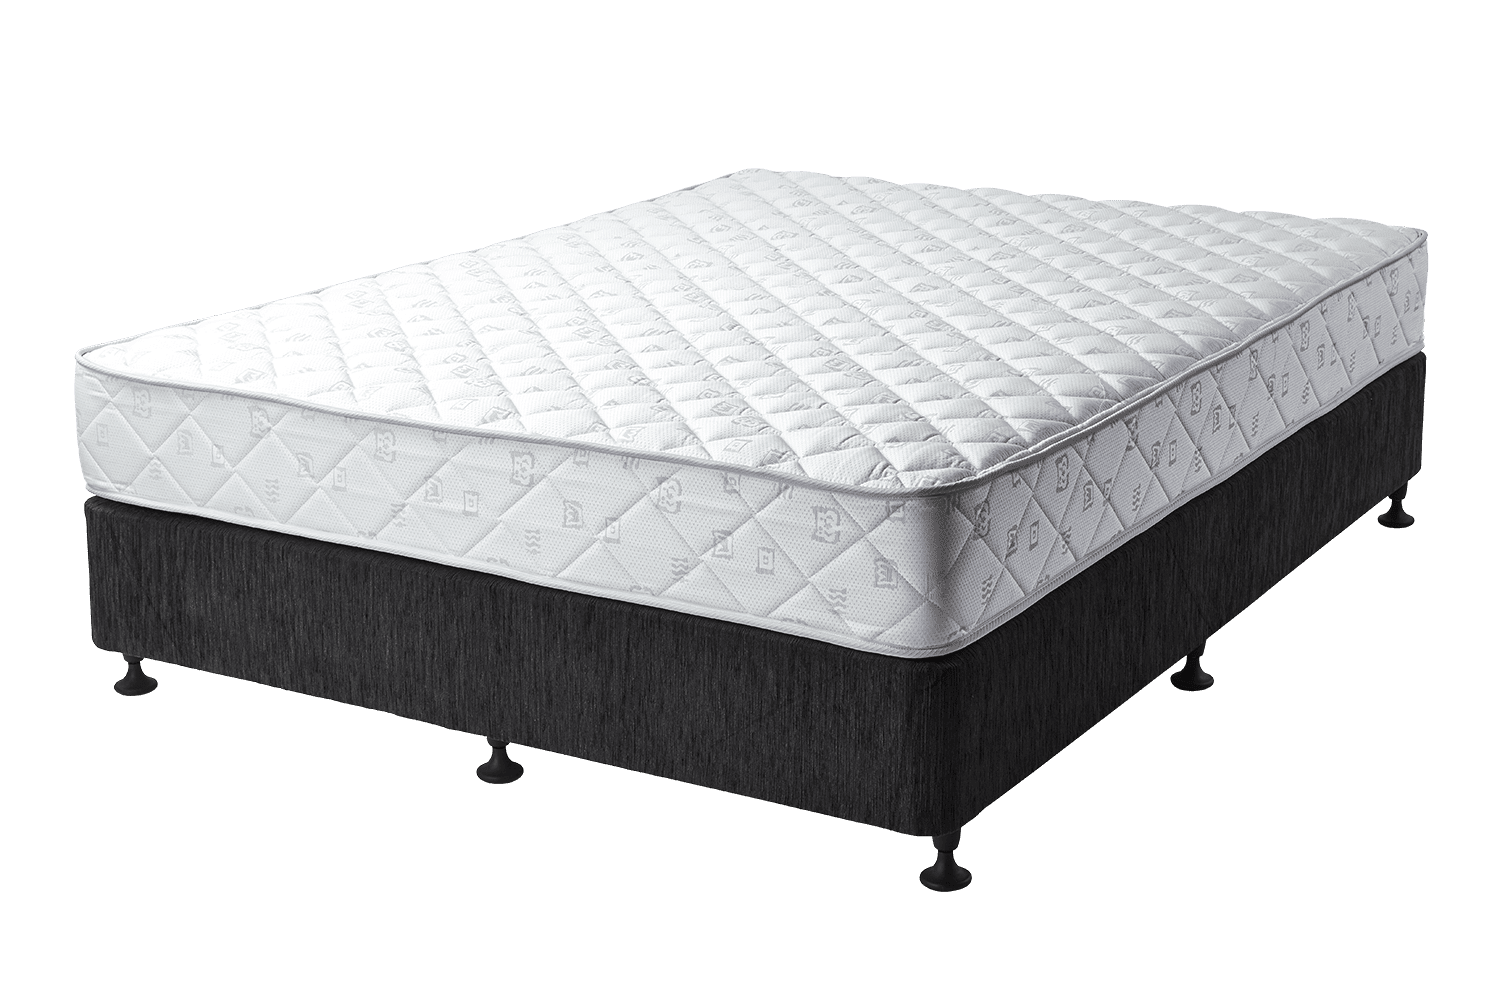 mattresses for sale mackay